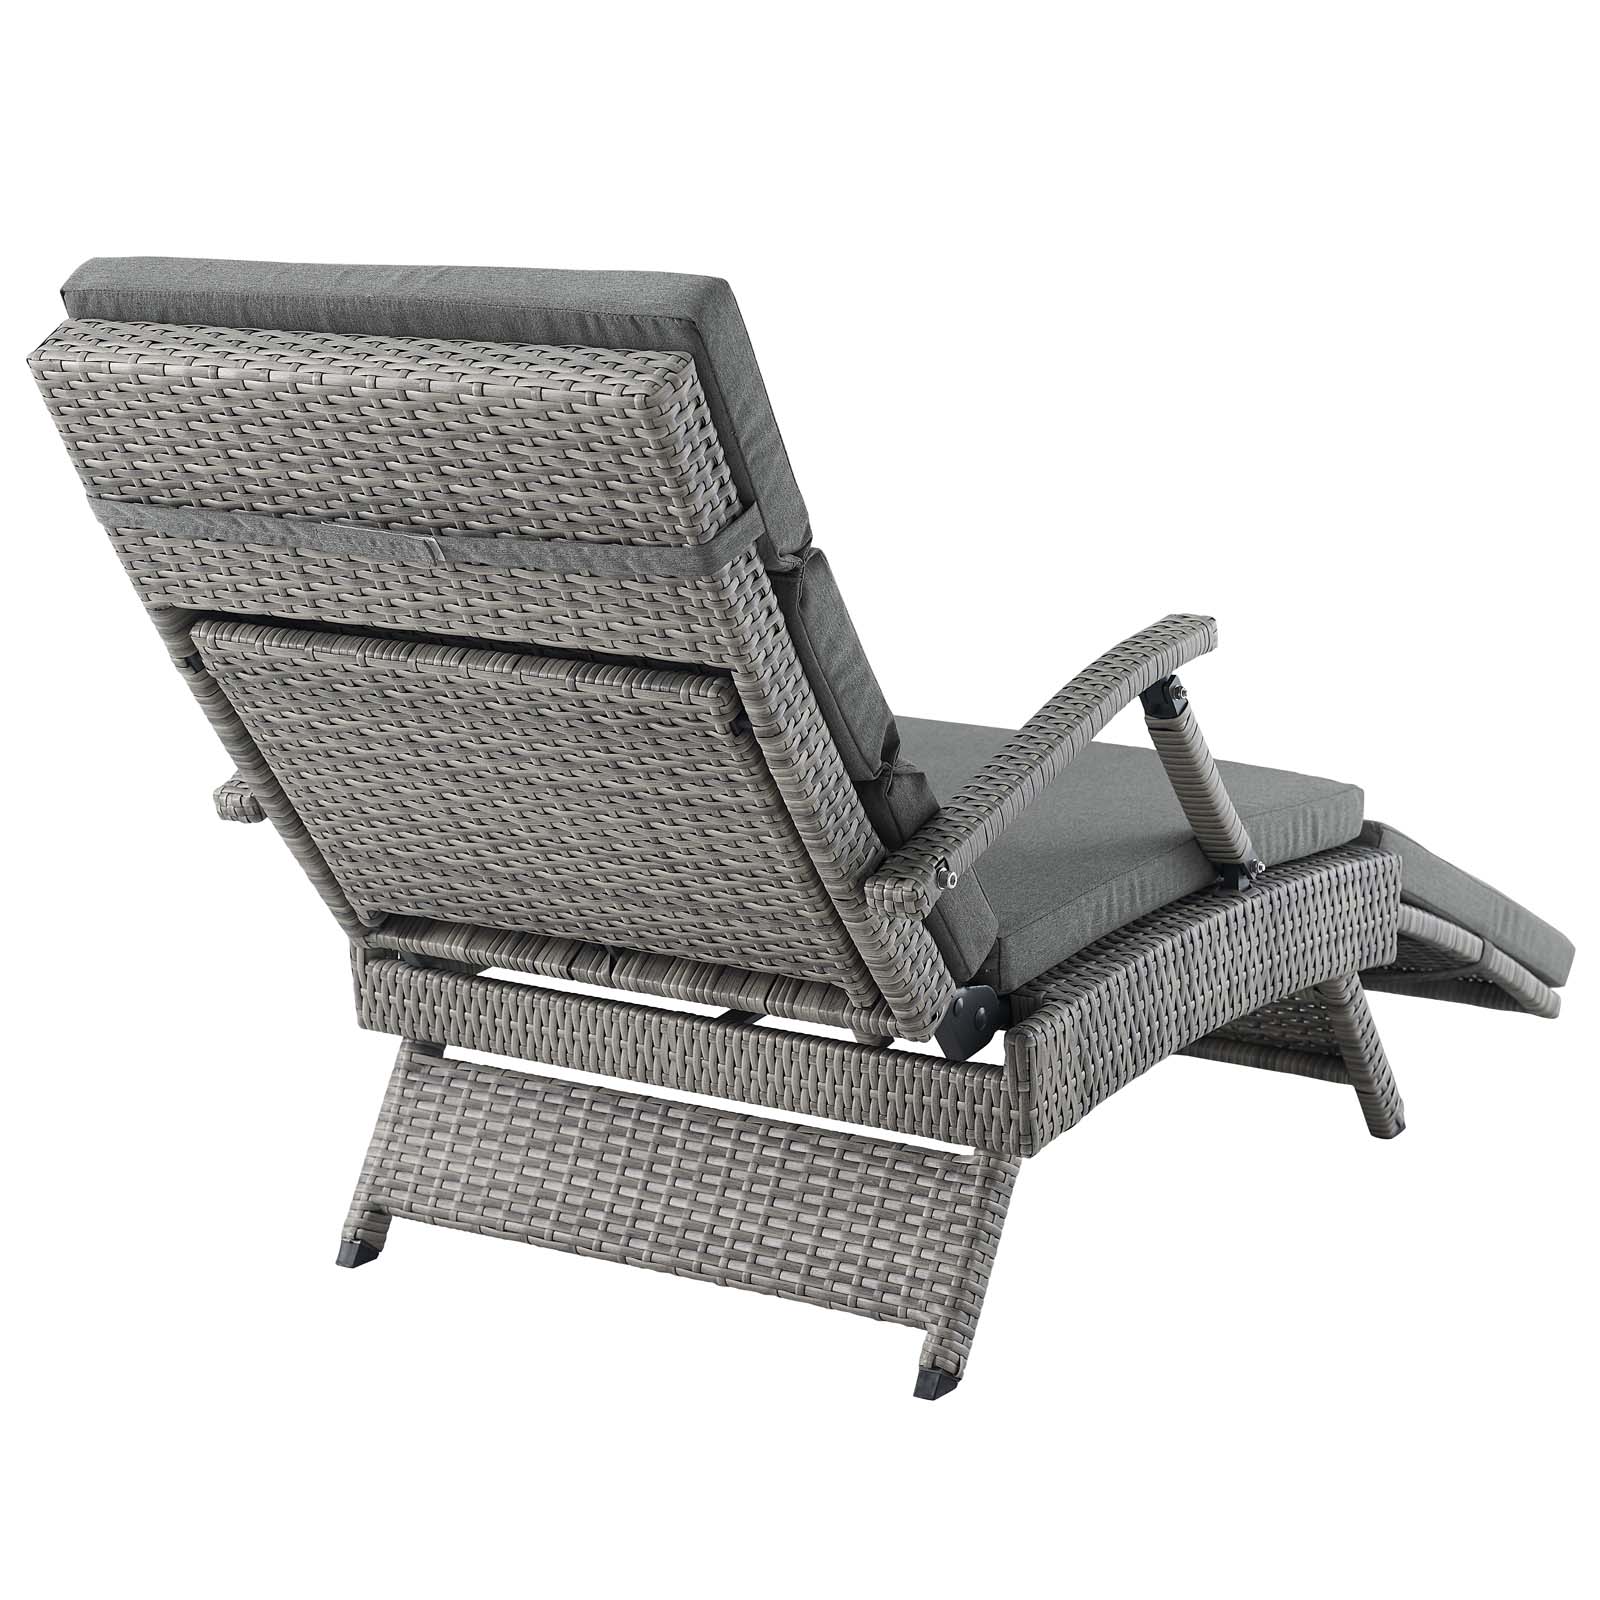 Modern Contemporary Urban Design Outdoor Patio Balcony Garden Furniture Lounge Chair Chaise, Rattan Wicker, Dark Grey Gray - image 4 of 8